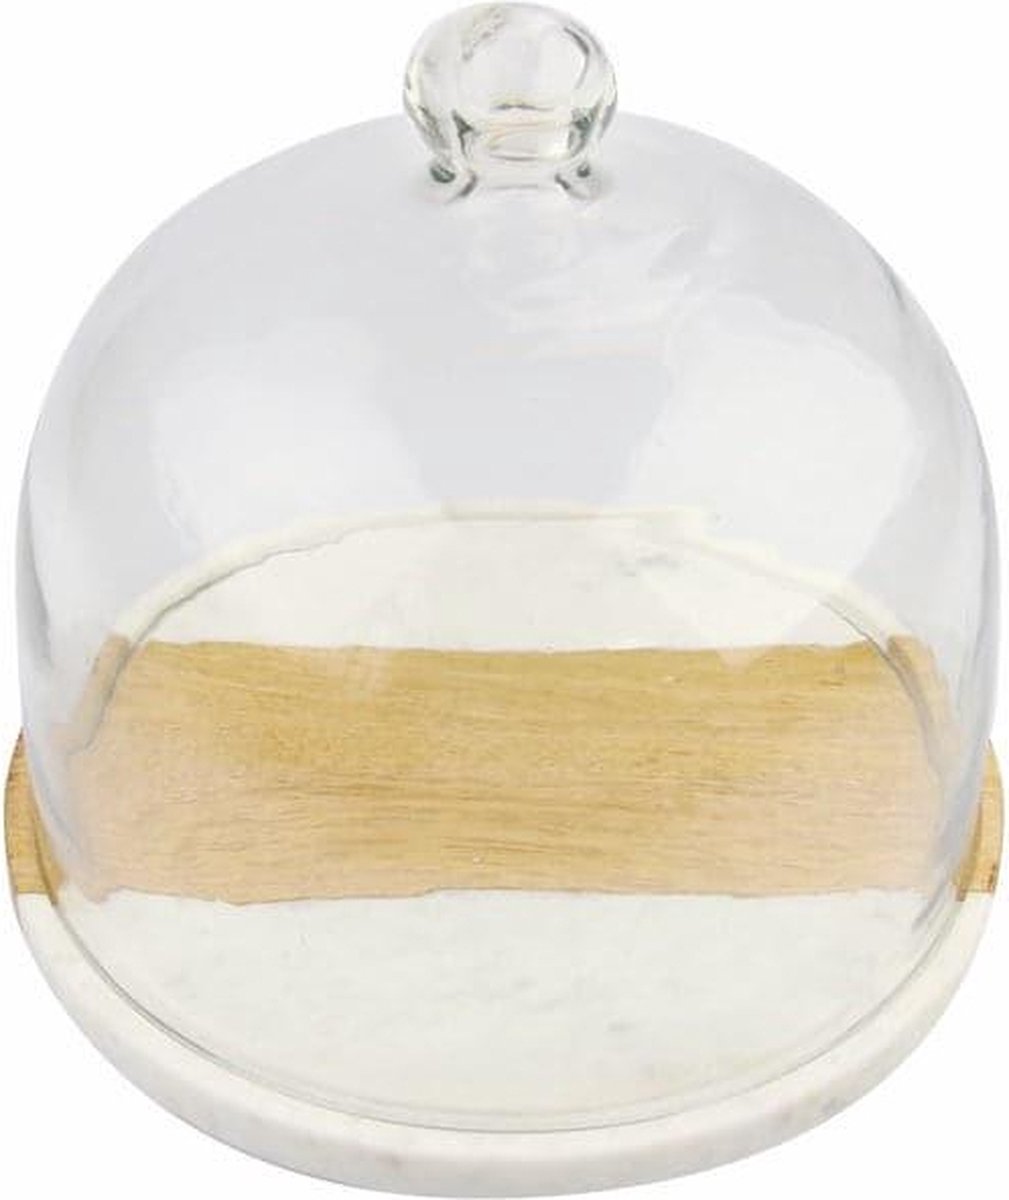 Be Home - Wit marmer met hout plateau met glazen stolp 21,5cm - Taartplateaus